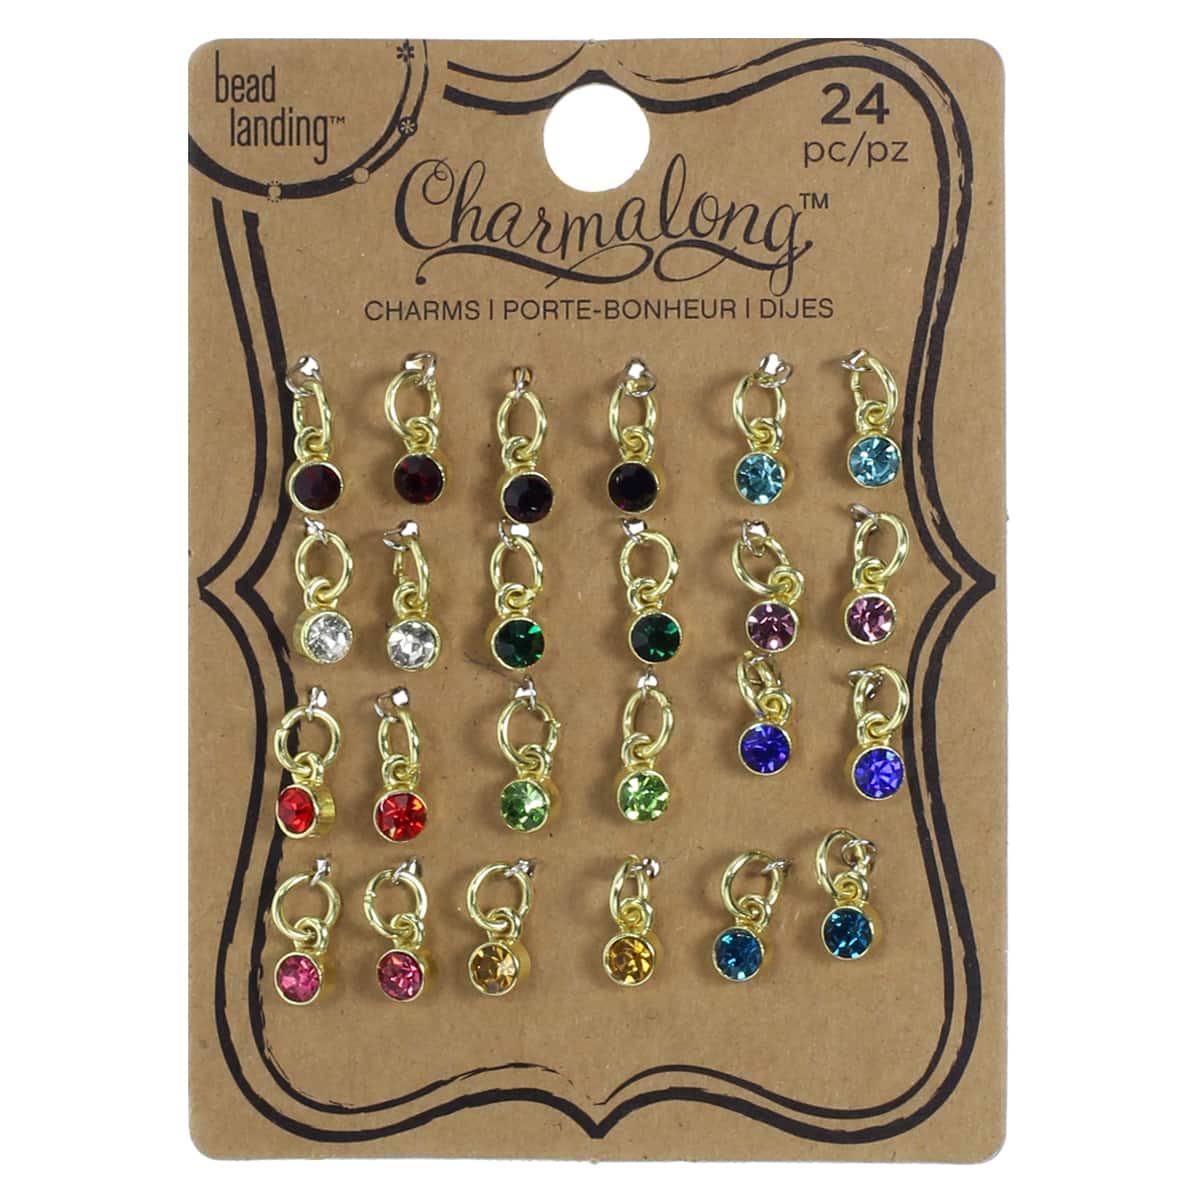 Charmalong&#x2122; Mini Crystal Charms by Bead Landing&#x2122;